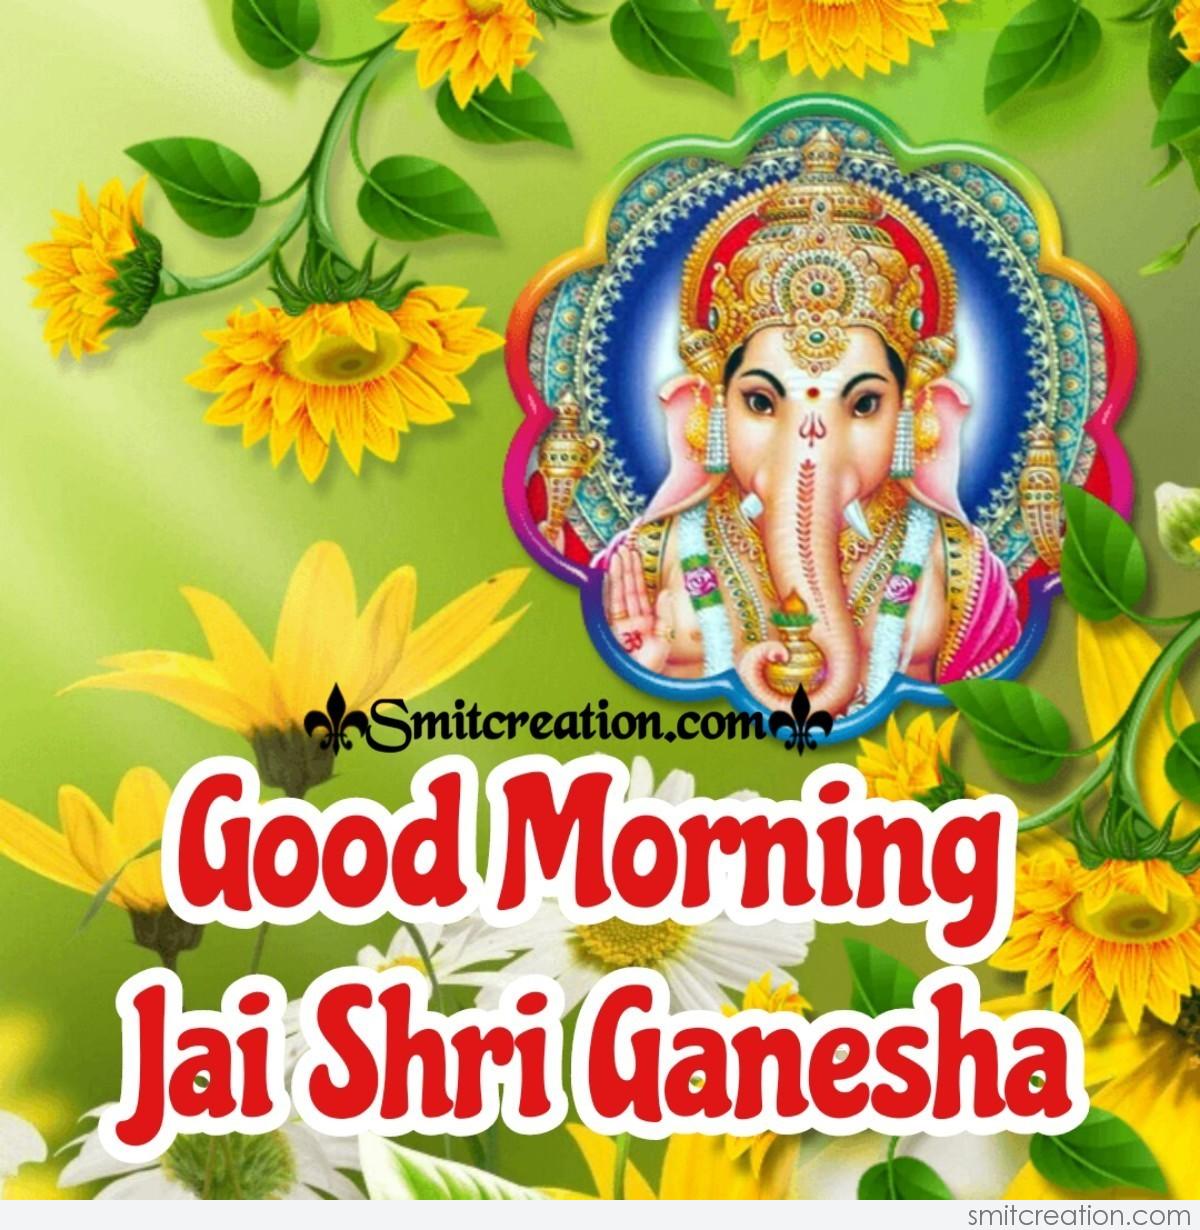 Good Morning Jai Shri Ganesha - SmitCreation.com